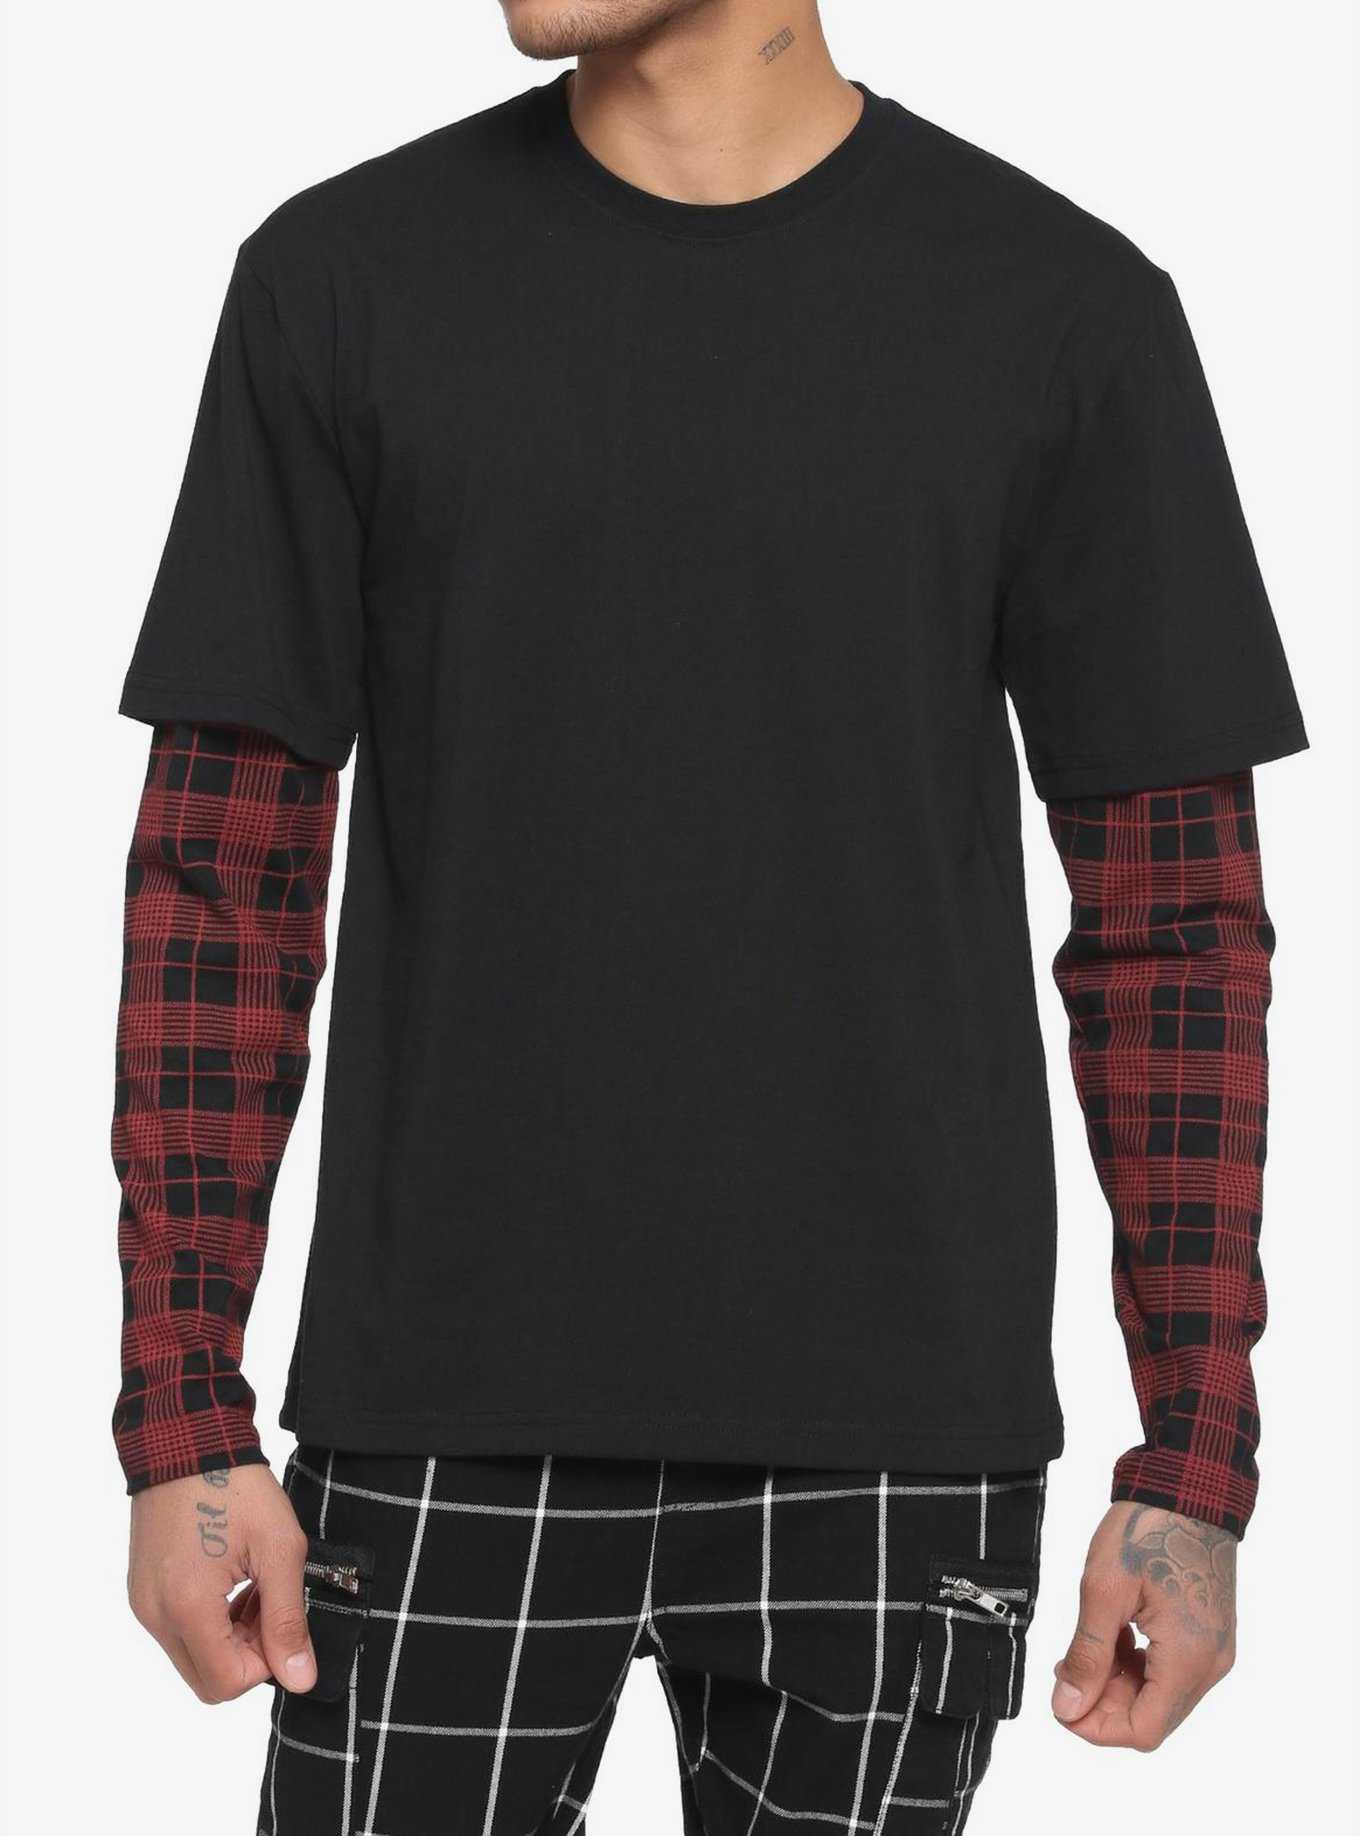 Black & Red Plaid Sleeve Twofer Long-Sleeve T-Shirt, , hi-res